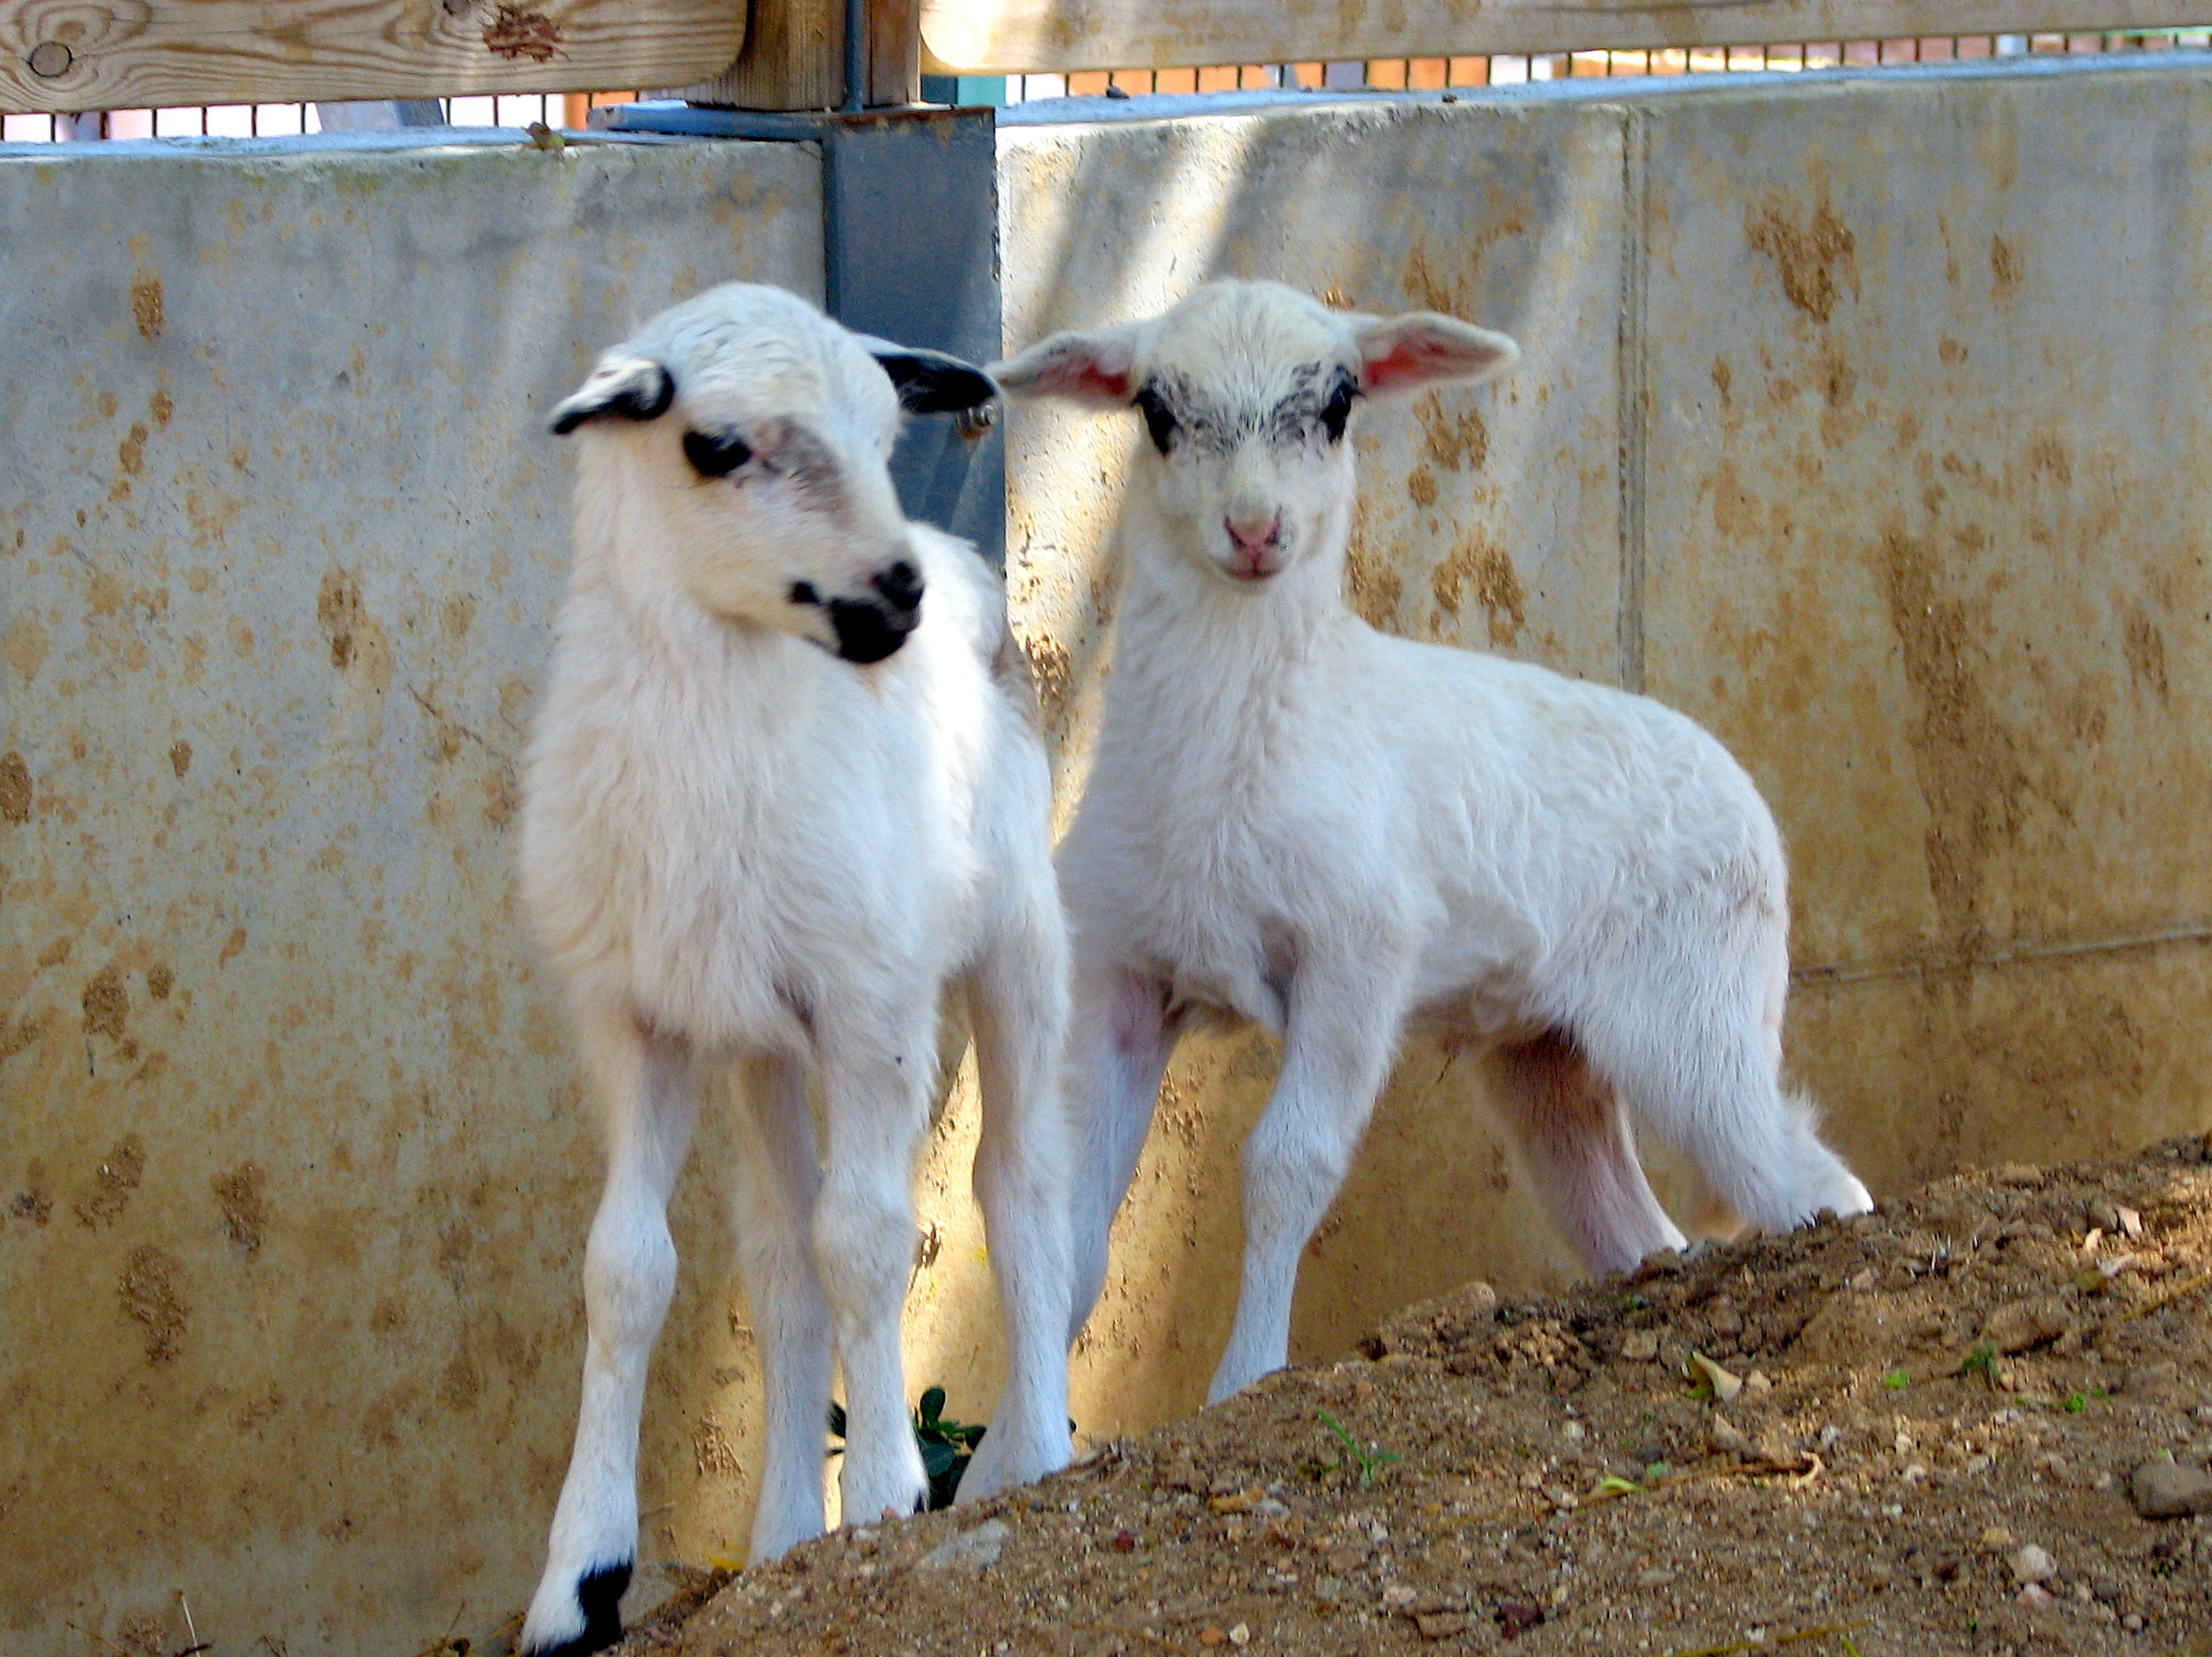 lambs-tropical-animals-saintes-antilles-pixtii-stock-images